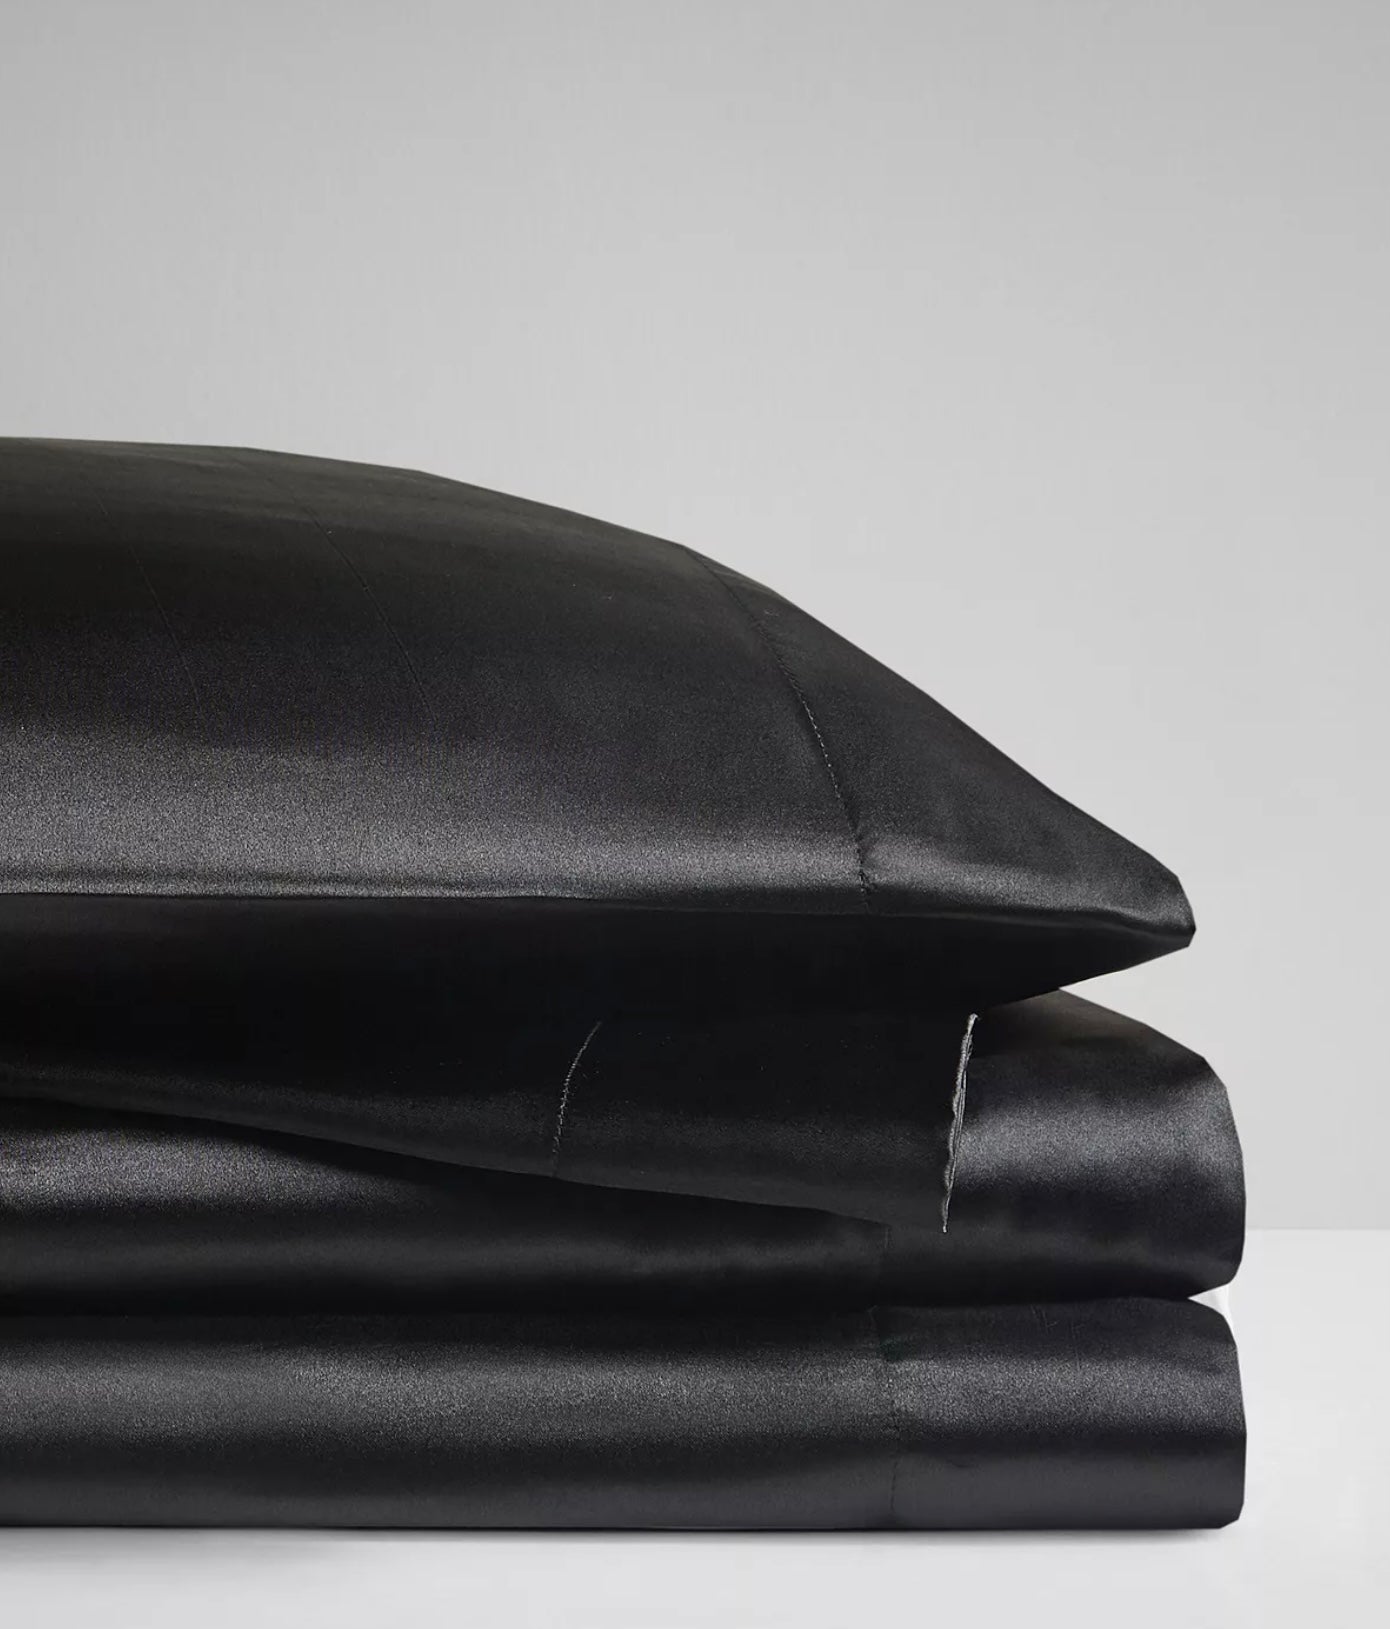 Wholesale: Satin Pillow Case - Standard Size